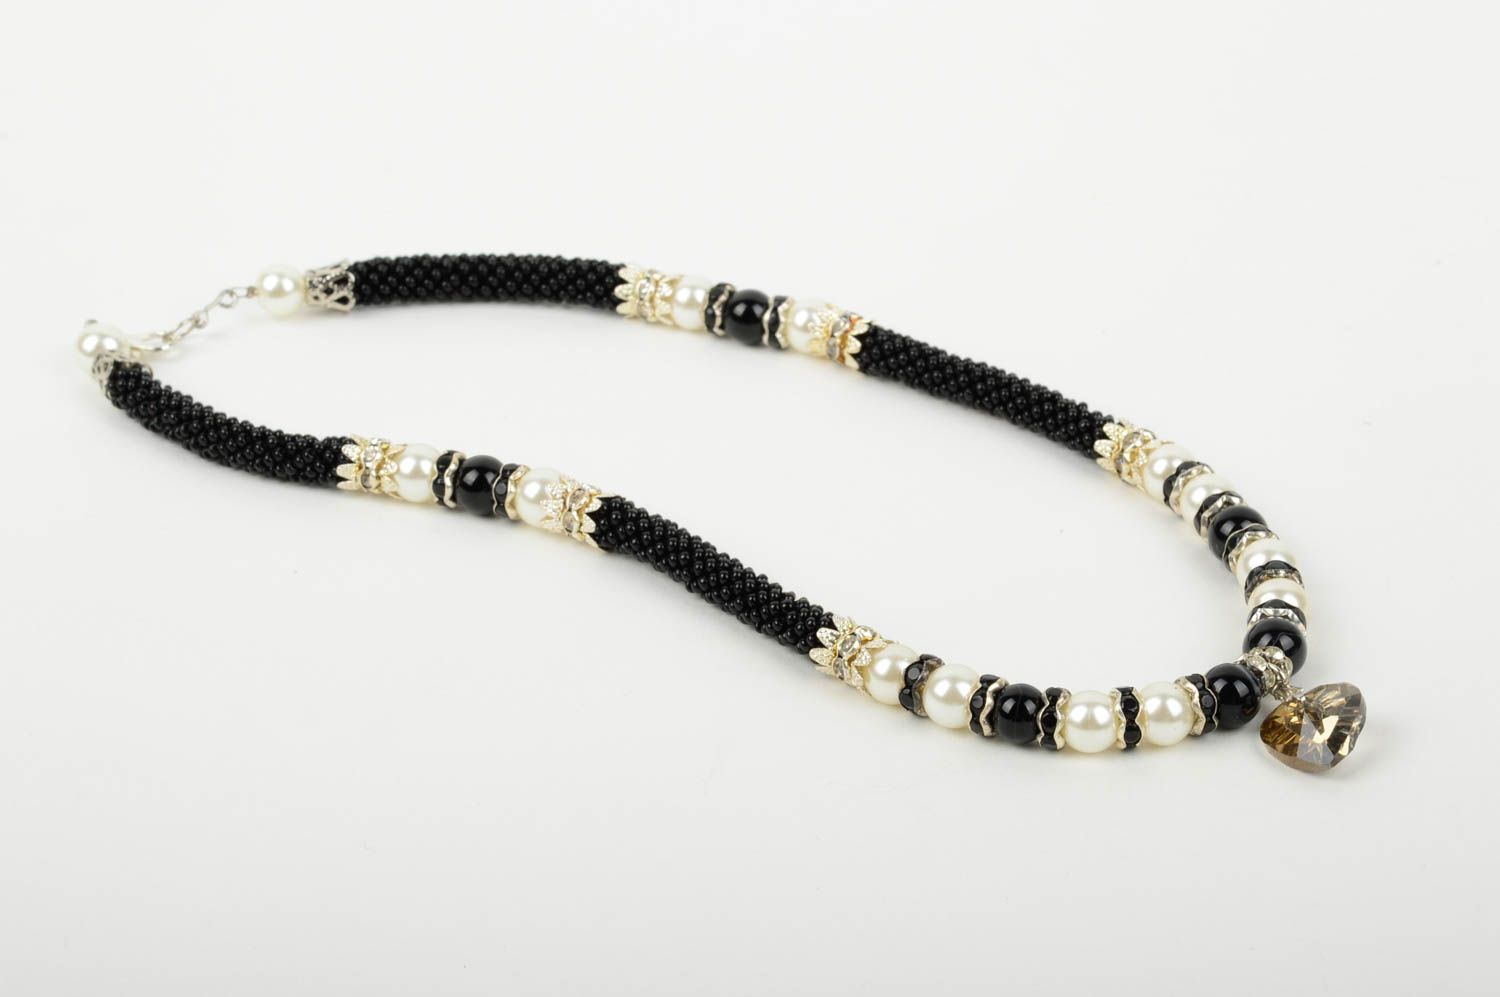 Handmade beaded cord necklace designer stylish necklace unusual jewelry photo 2